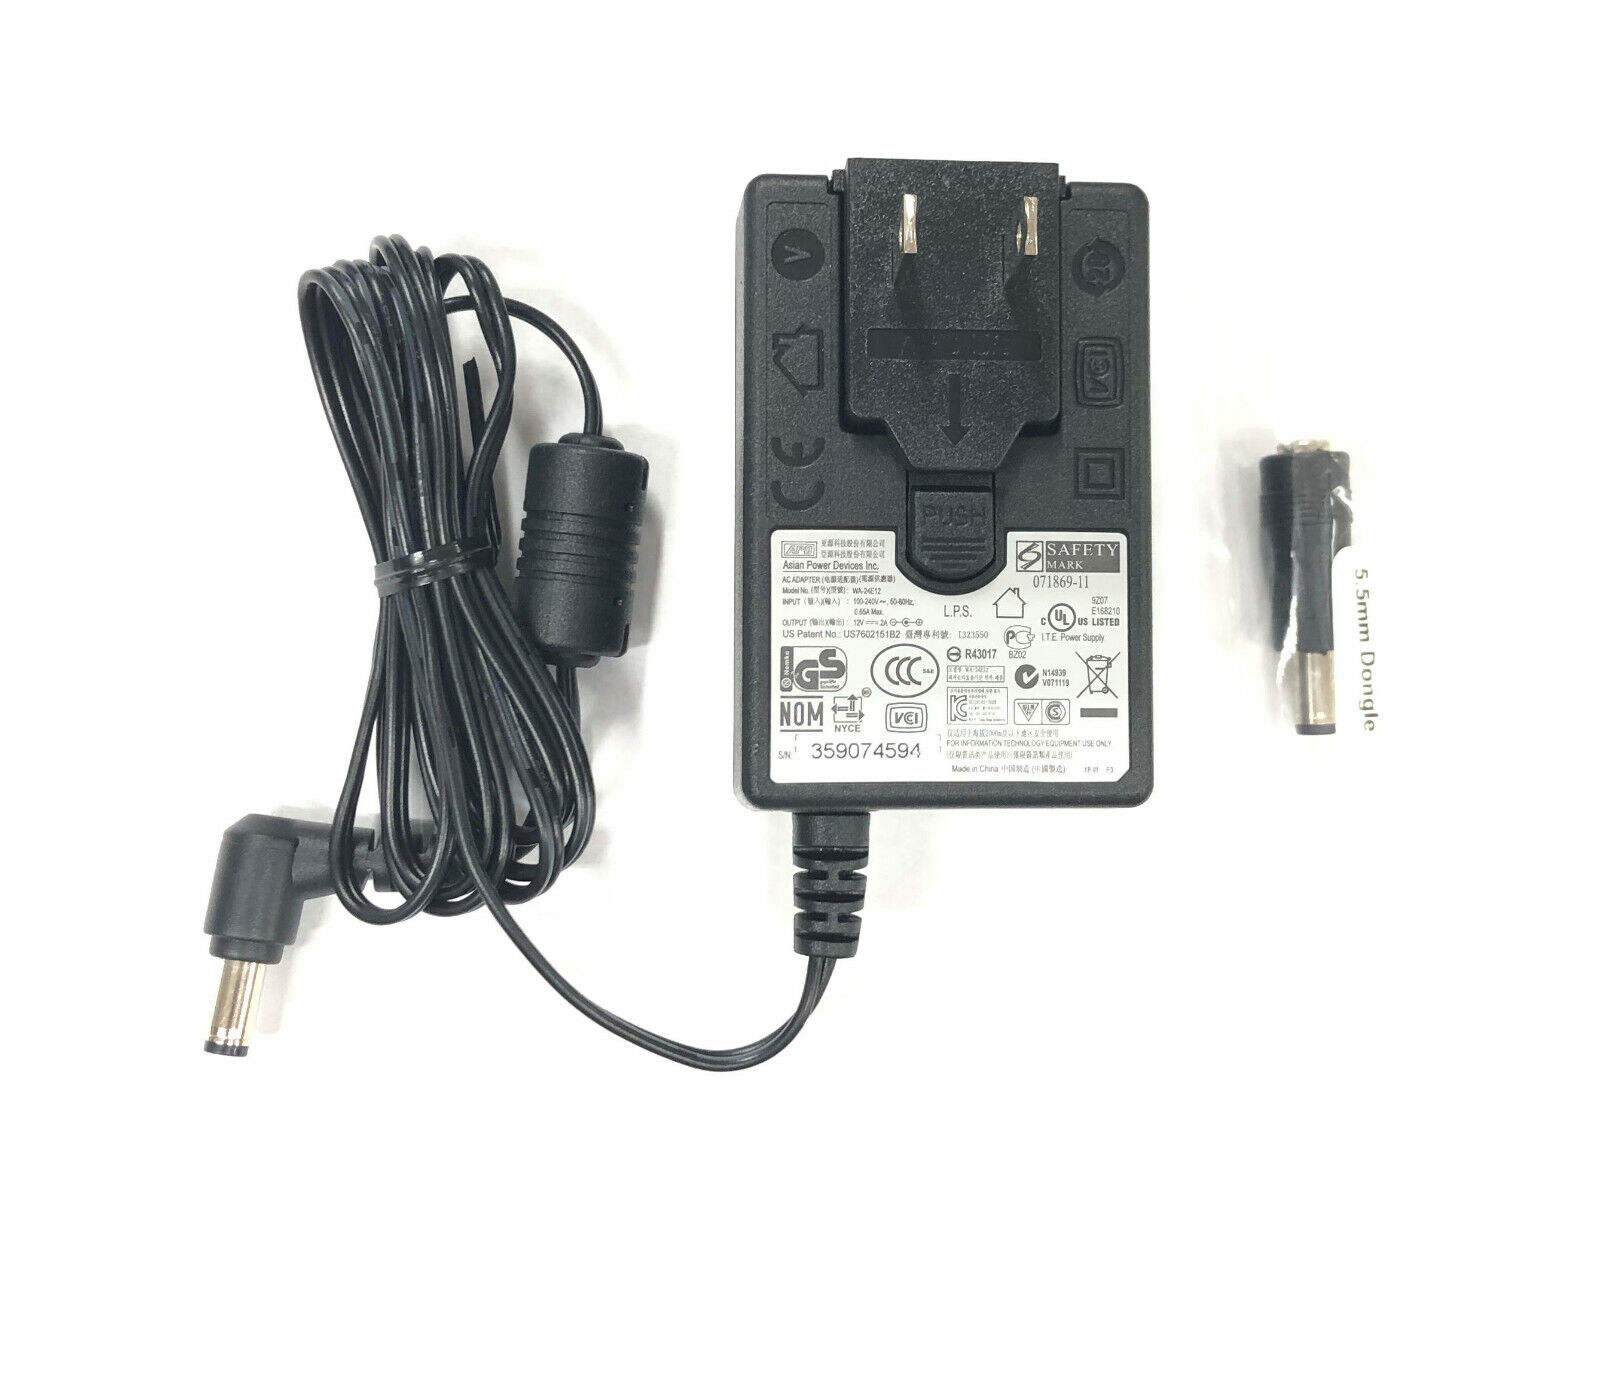 New Original ADP 12V AC Adapter For My Book Essential Edition 2.0 WD6400H1U-00